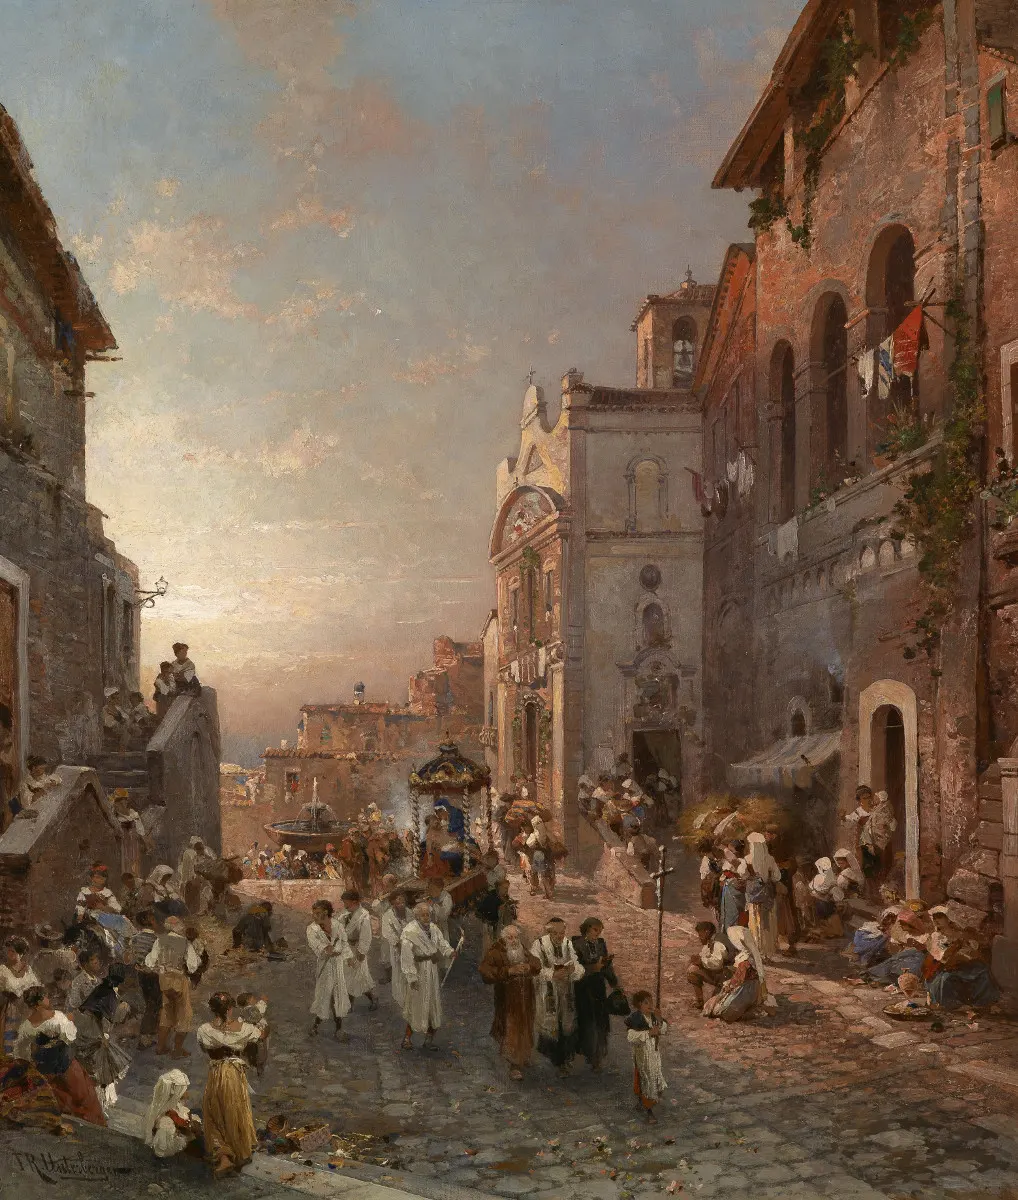 Franz Richard Unterberger's Procession in Naples